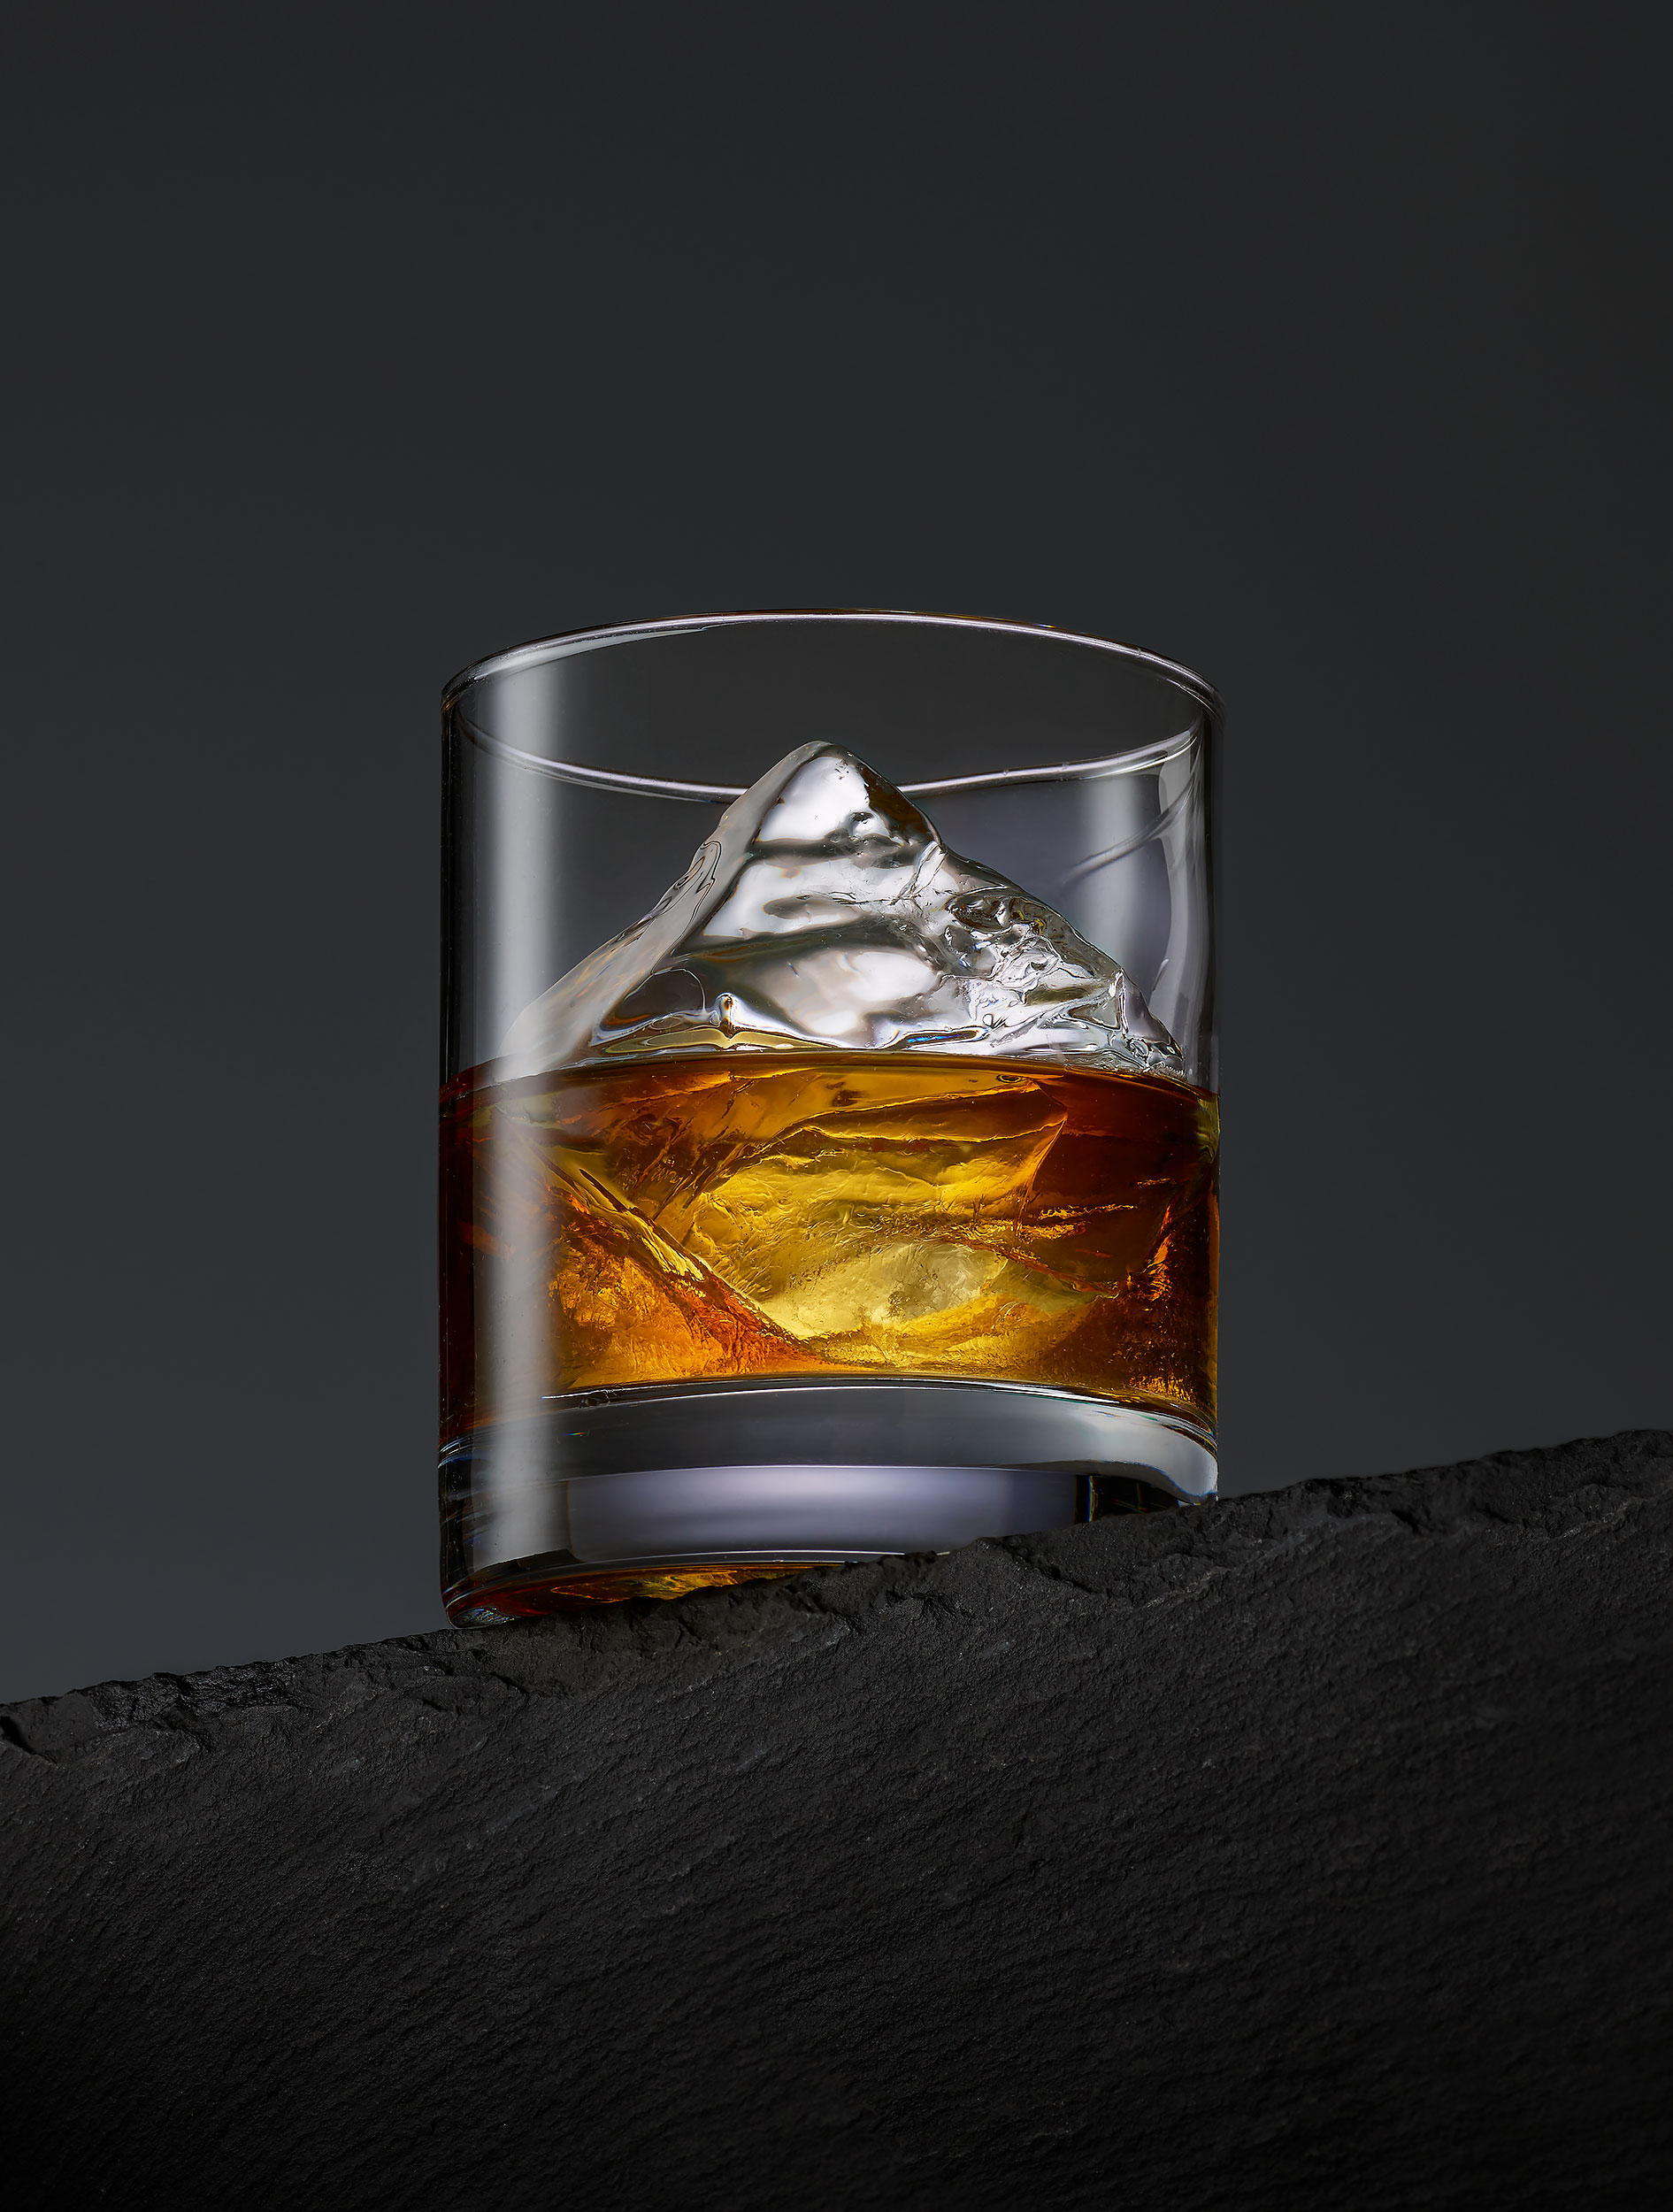 10.whisky_glass_sara_Morris_SFW